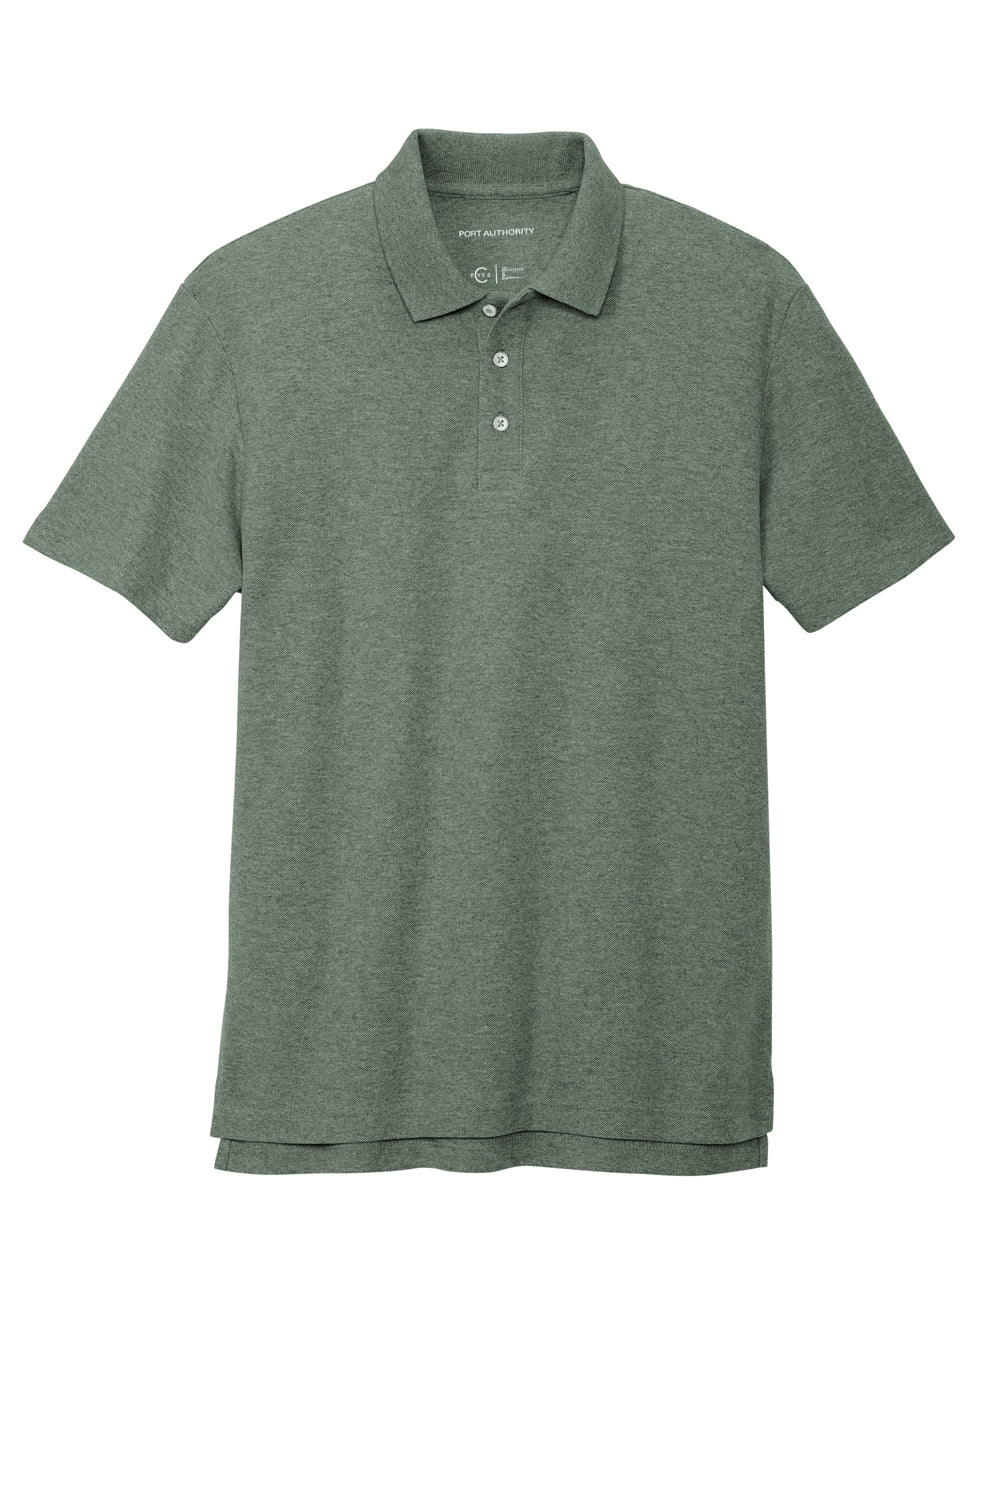 Port Authority K867 Mens C-FREE Pique Short Sleeve Polo Shirt Heather Dark Green Flat Front